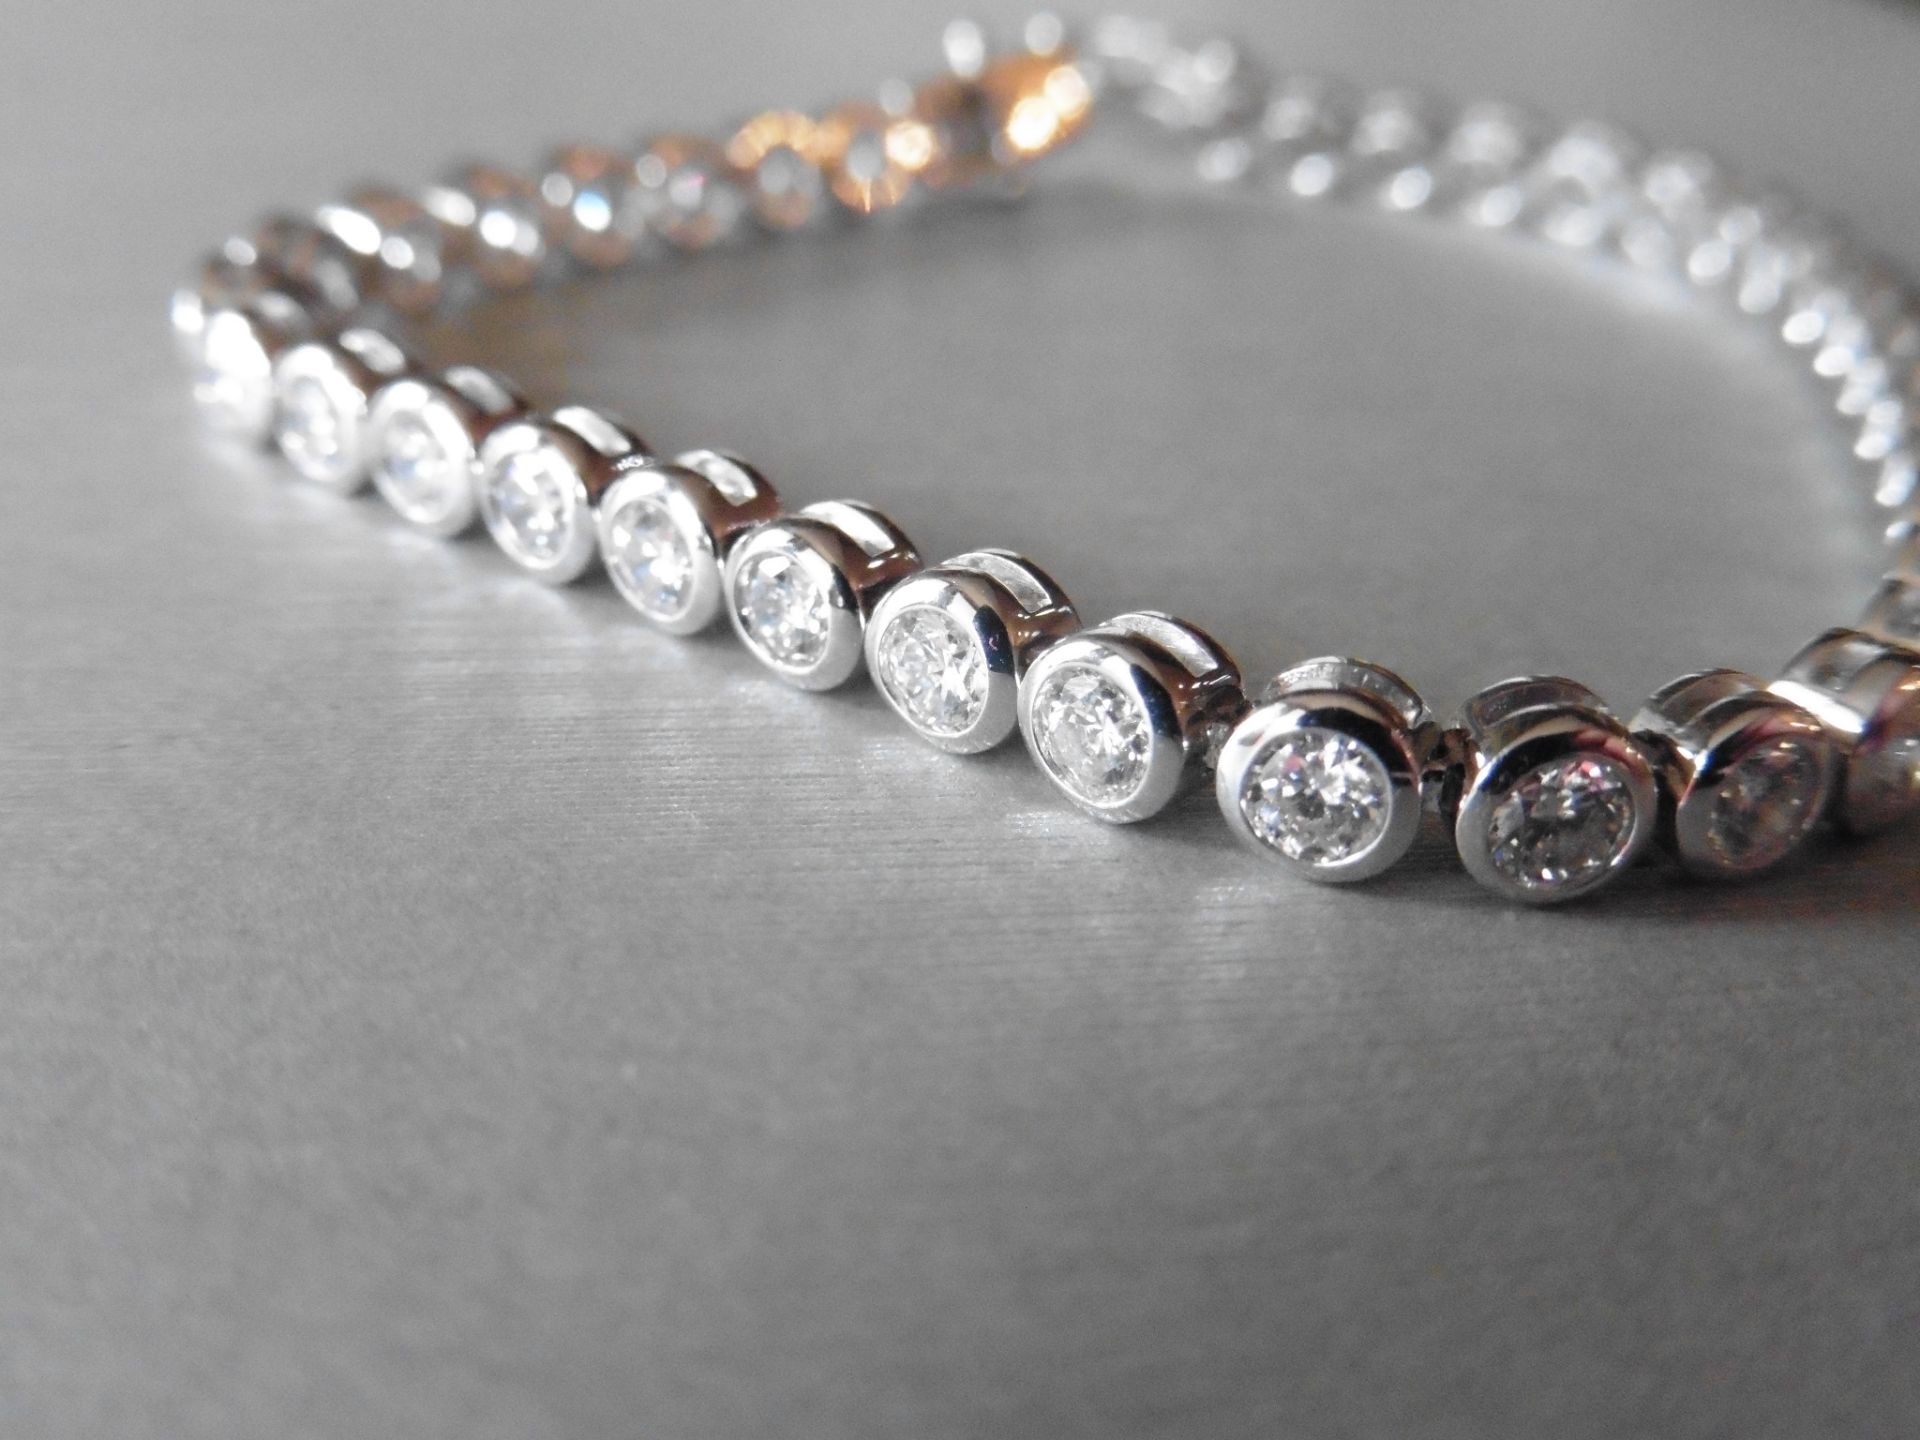 18ct white gold diamond tennis style bracelet set with brilliant cut diamonds weighing 5.60ct